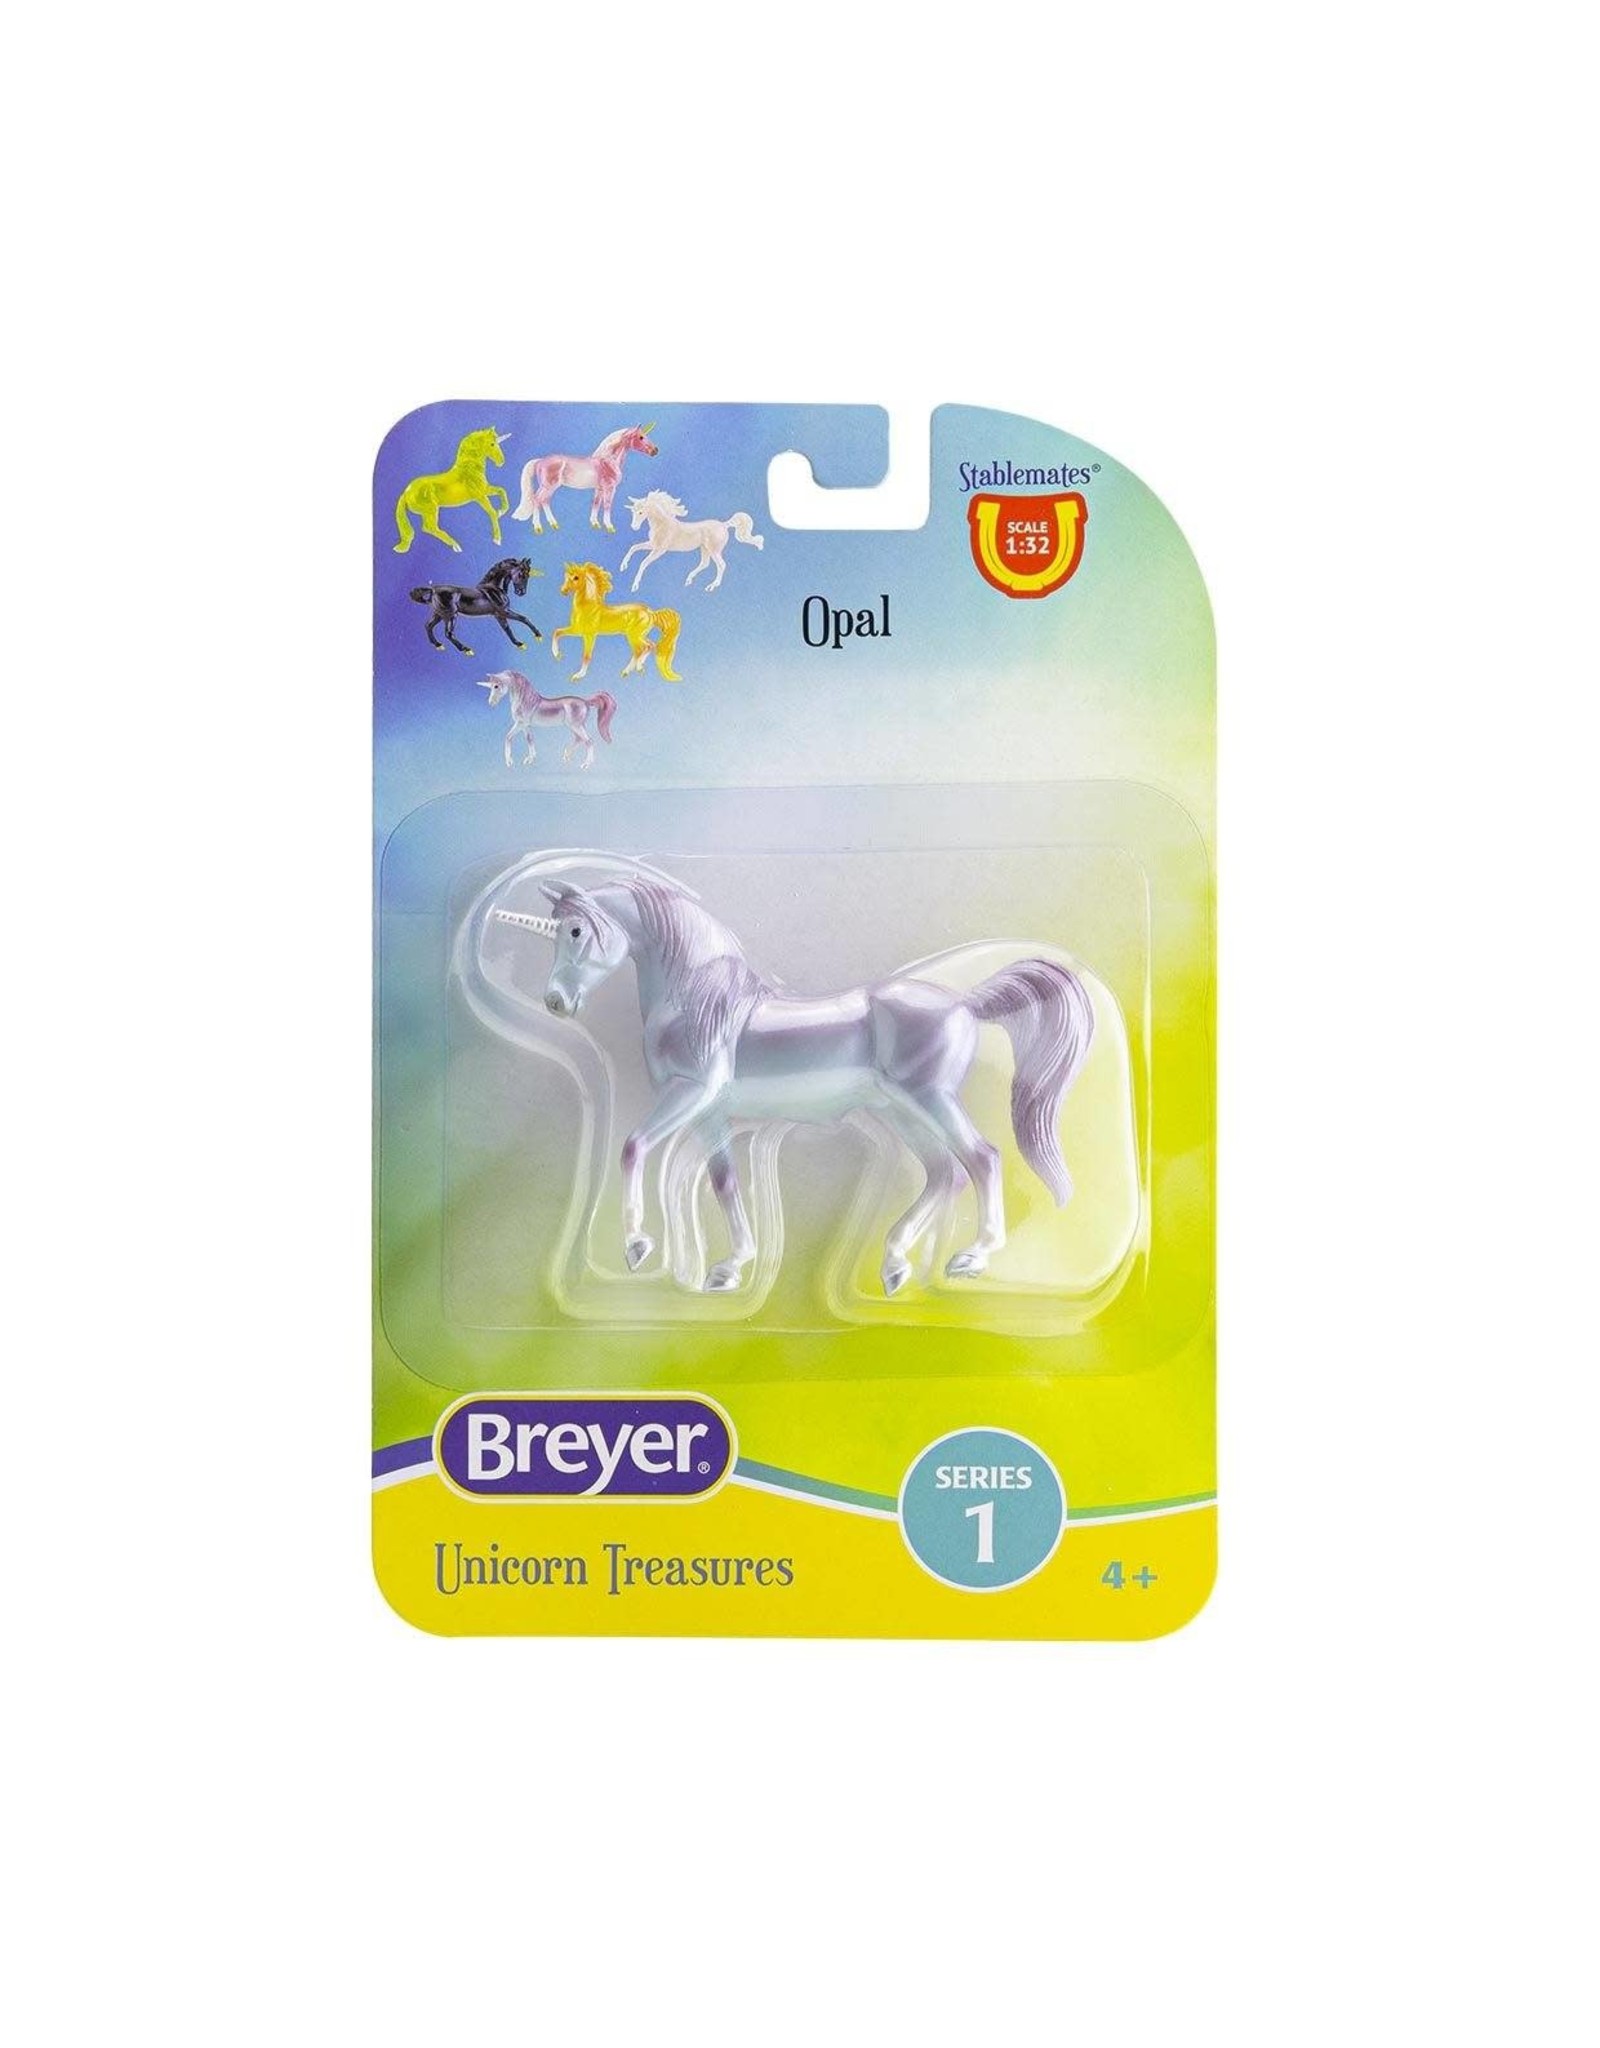 Breyer Unicorn Treasures Singles